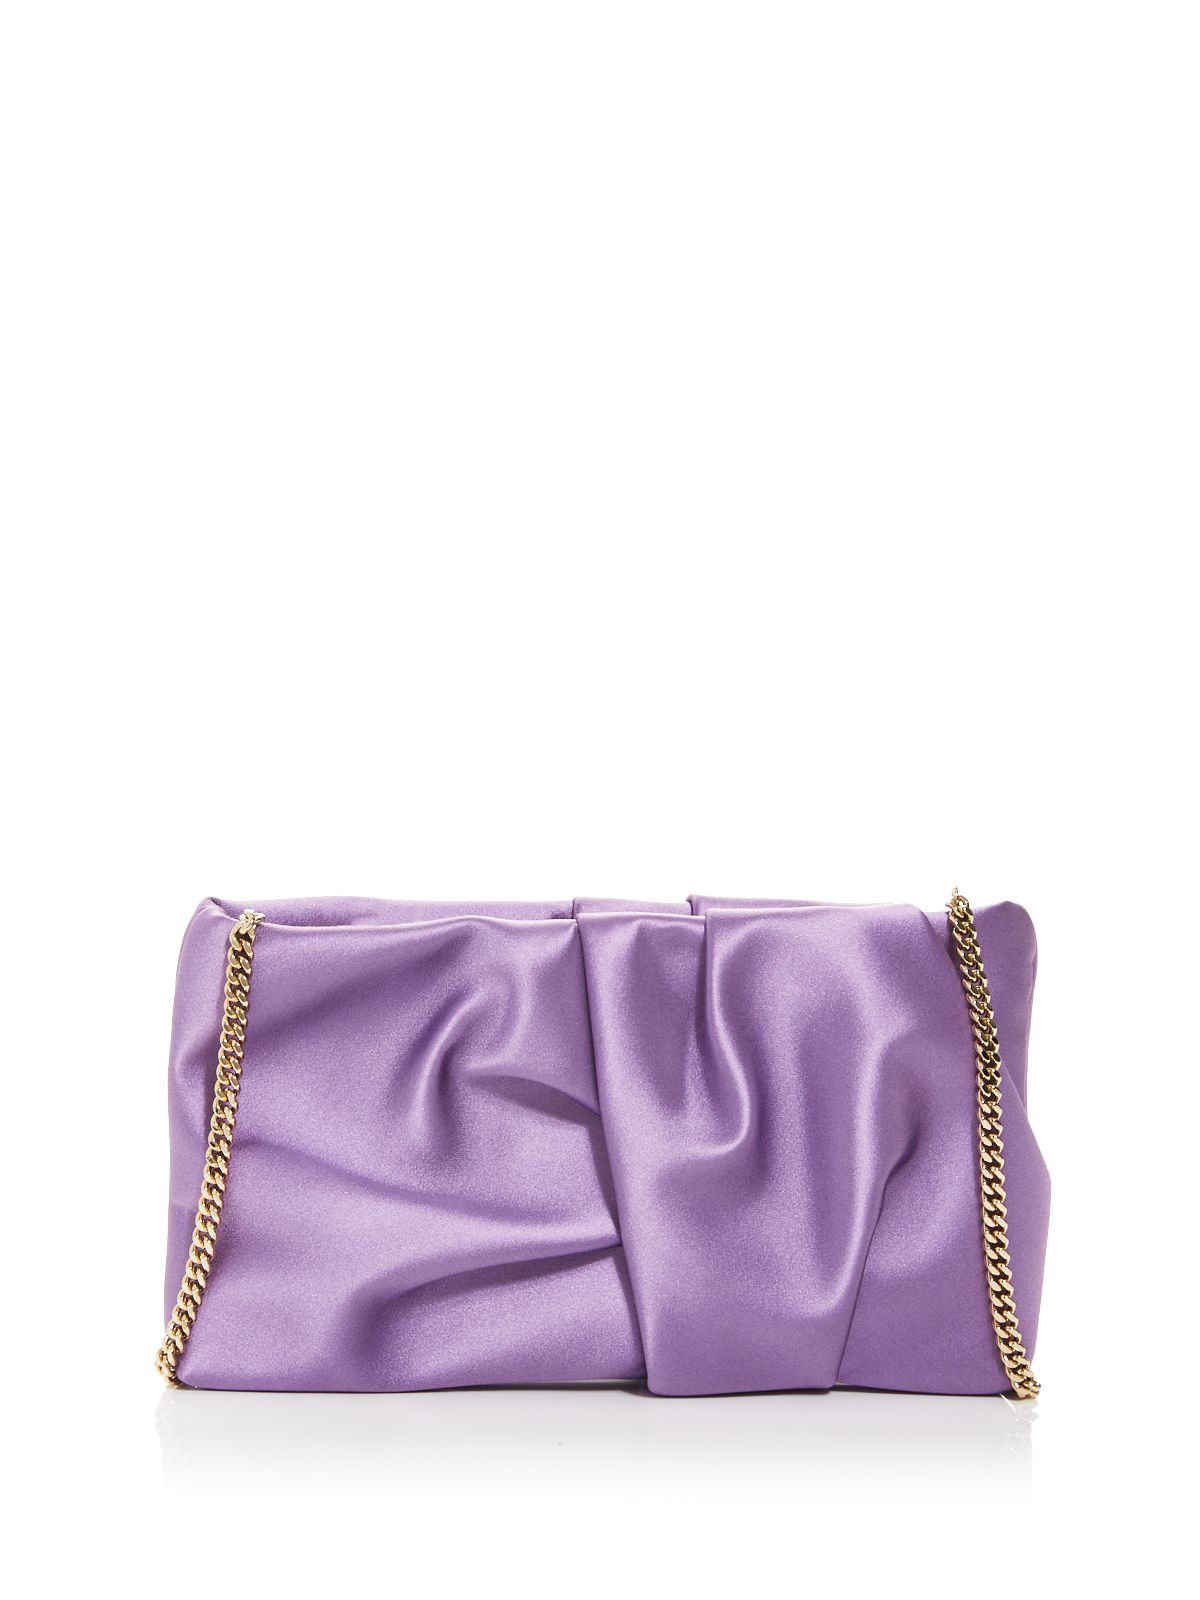 JIMMY CHOO Women's Purple Solid Ruched Chain Strap Clutch Handbag Purse